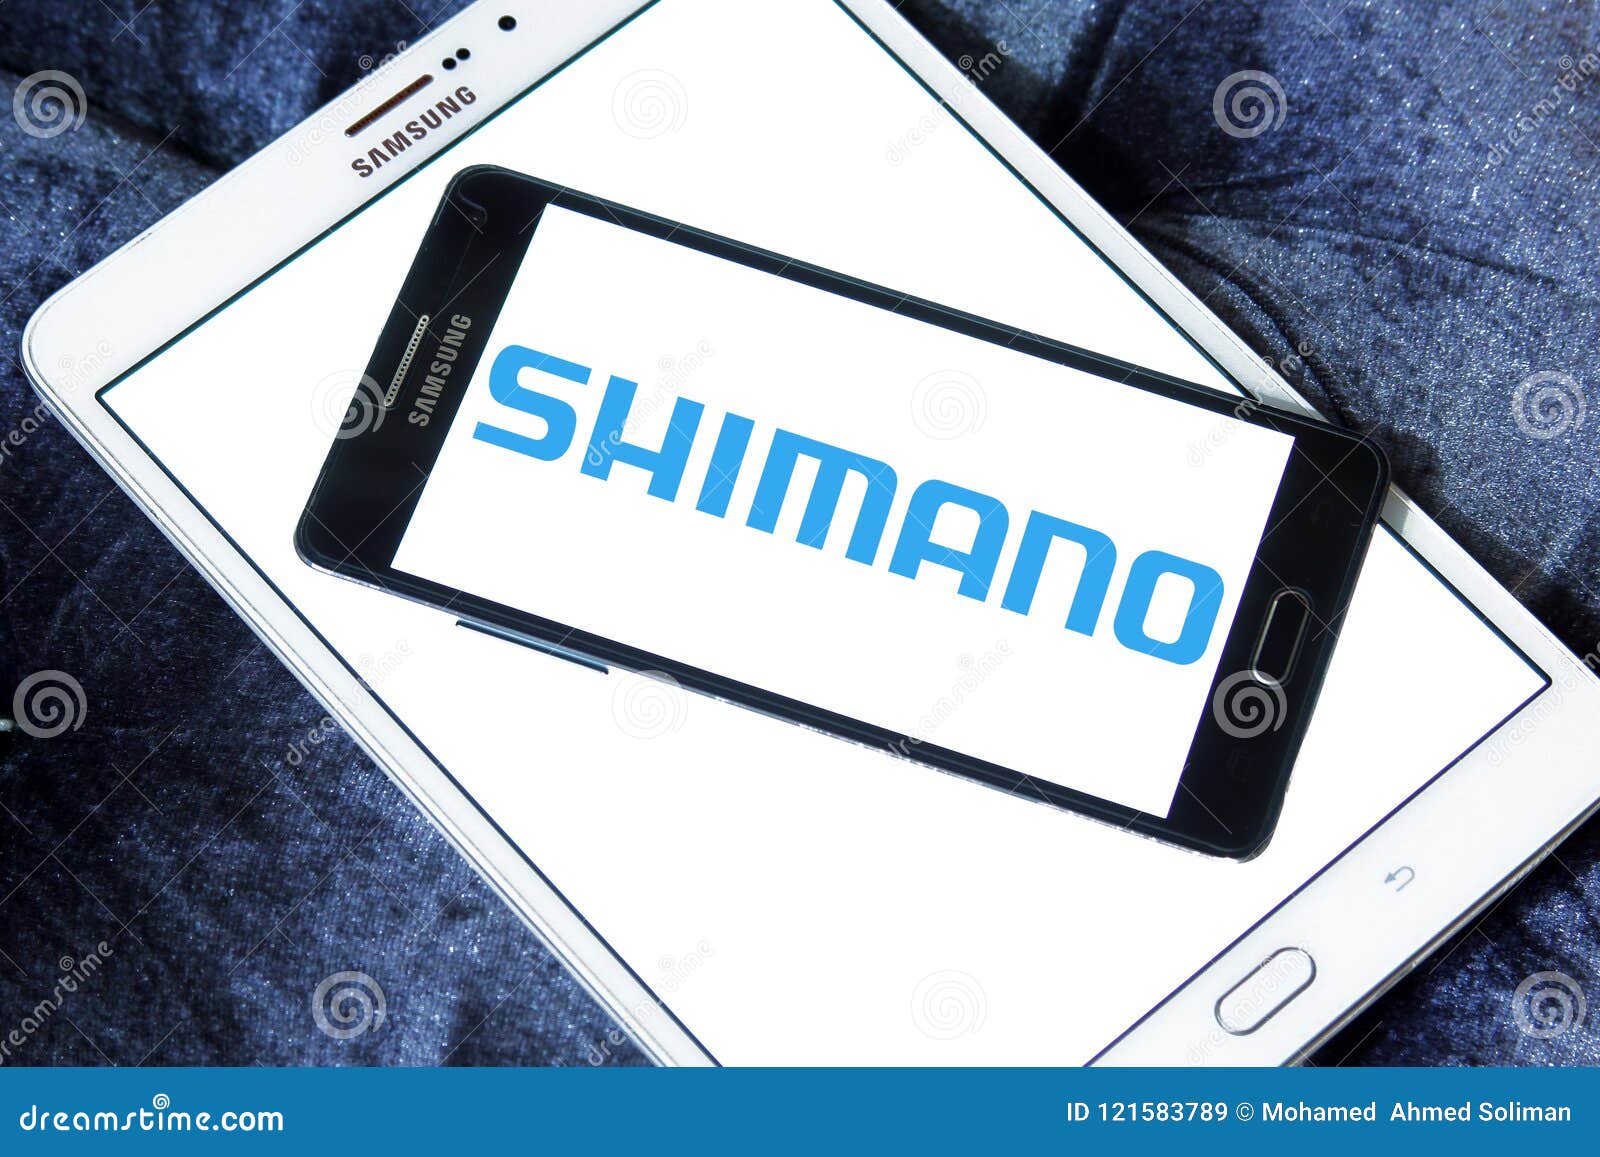 Shimano company logo editorial stock image. Image of manufacturer